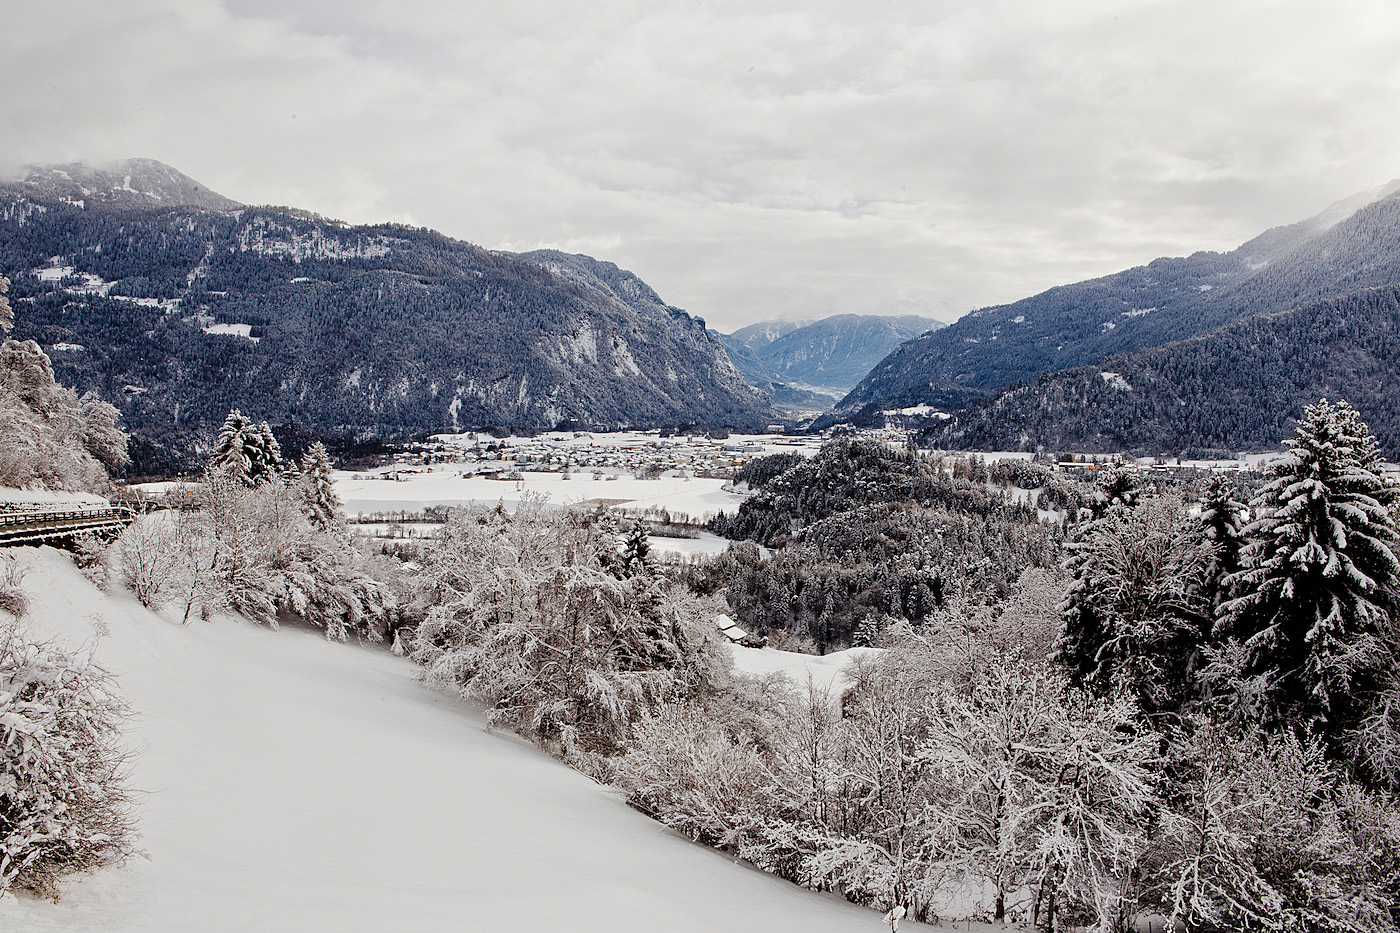 Skiferien in der Schweiz, Skigebiet LAAX, LAAXisniceyo, Graubünden, skiing in LAAX, culinary trail LAAX/Flims, ski weekend LAAX, winter holiday, winter in Switzerland